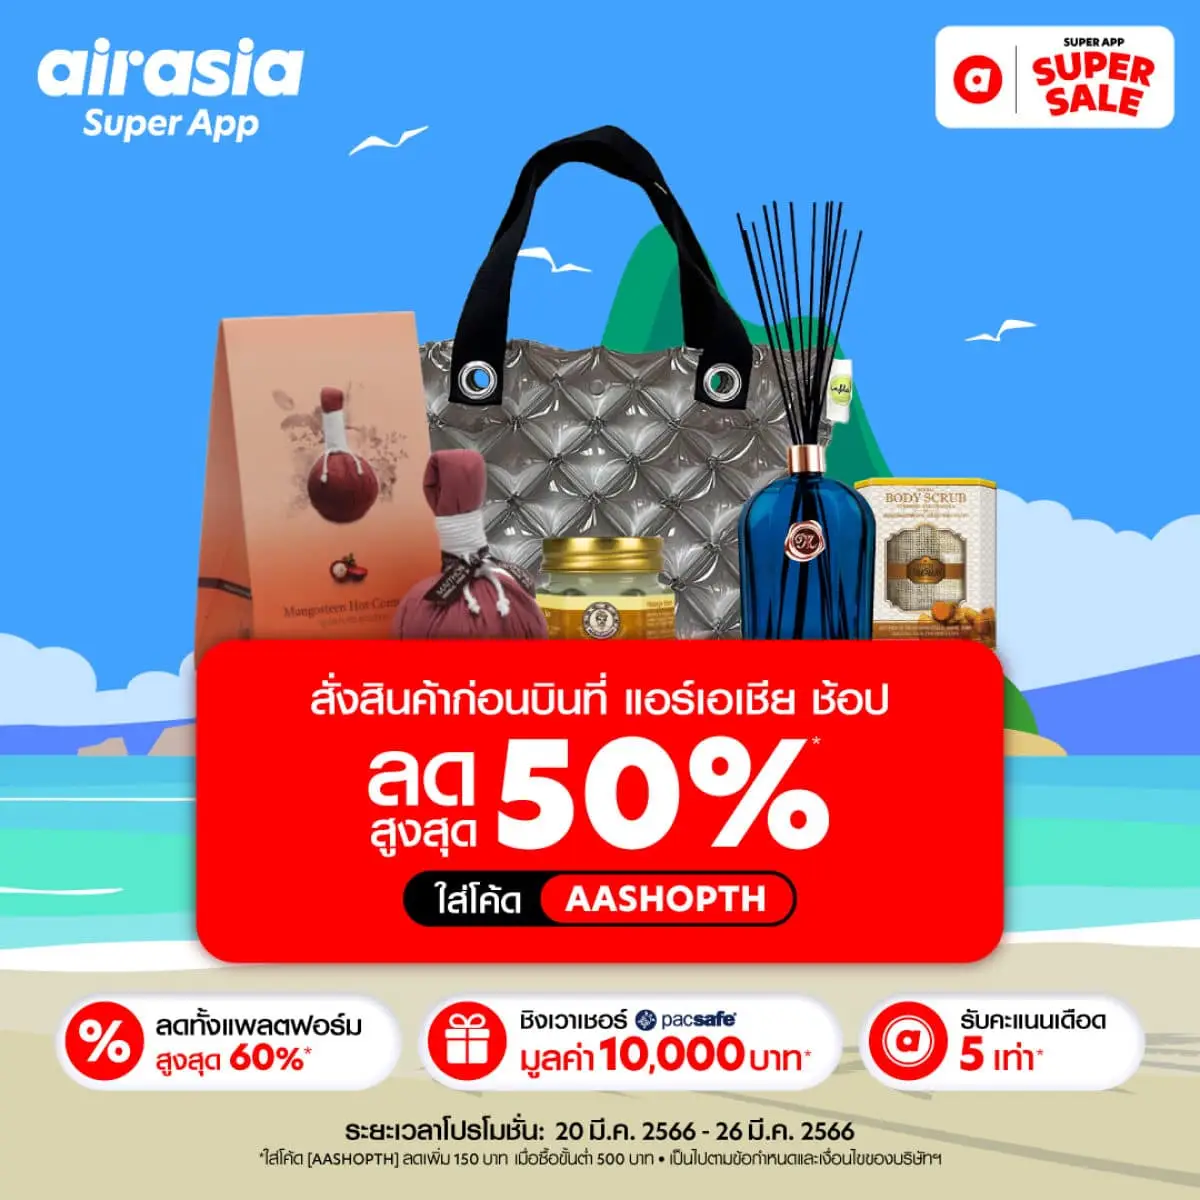 airasia Super Sale โปรฮอต shop